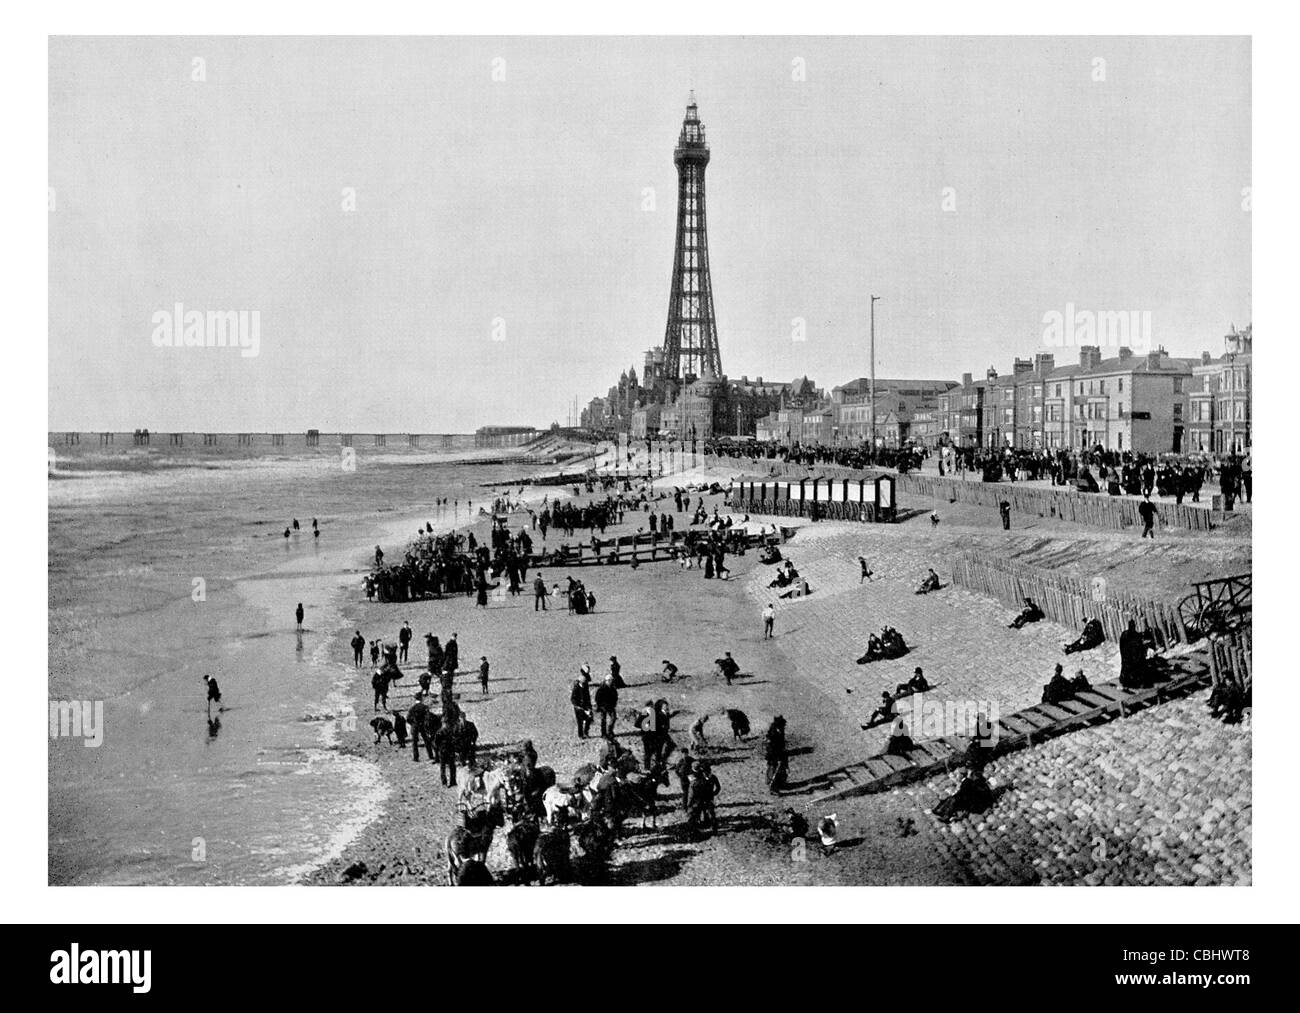 Blackpool Tower Lancashire England World Federation Great Towers Grade 1 listed building Promenade esplanade pier seaside resort Stock Photo